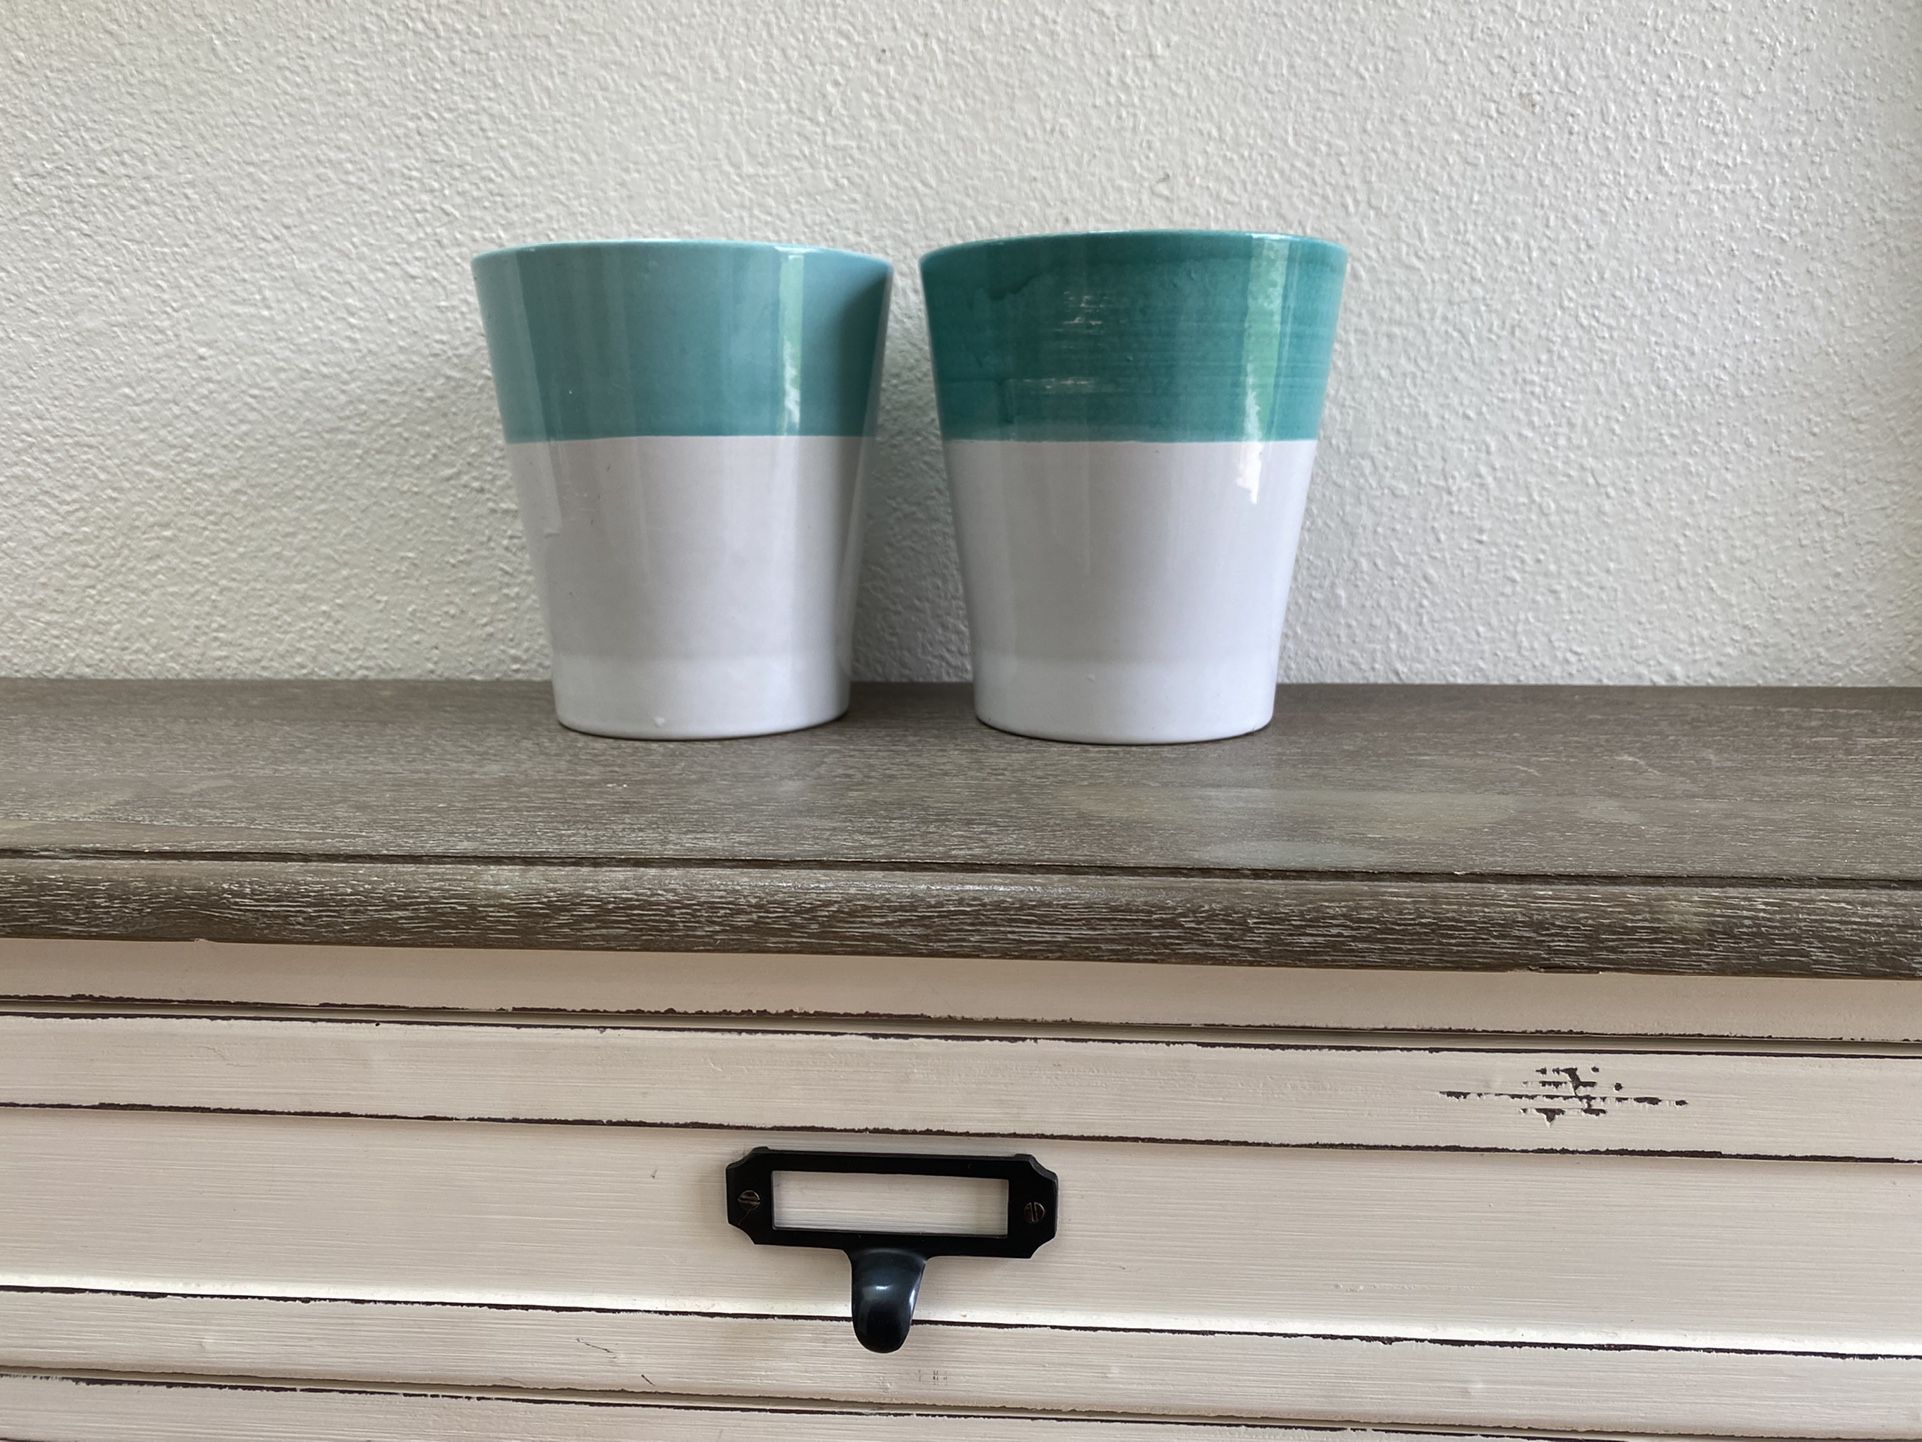 Two ceramic planter pots